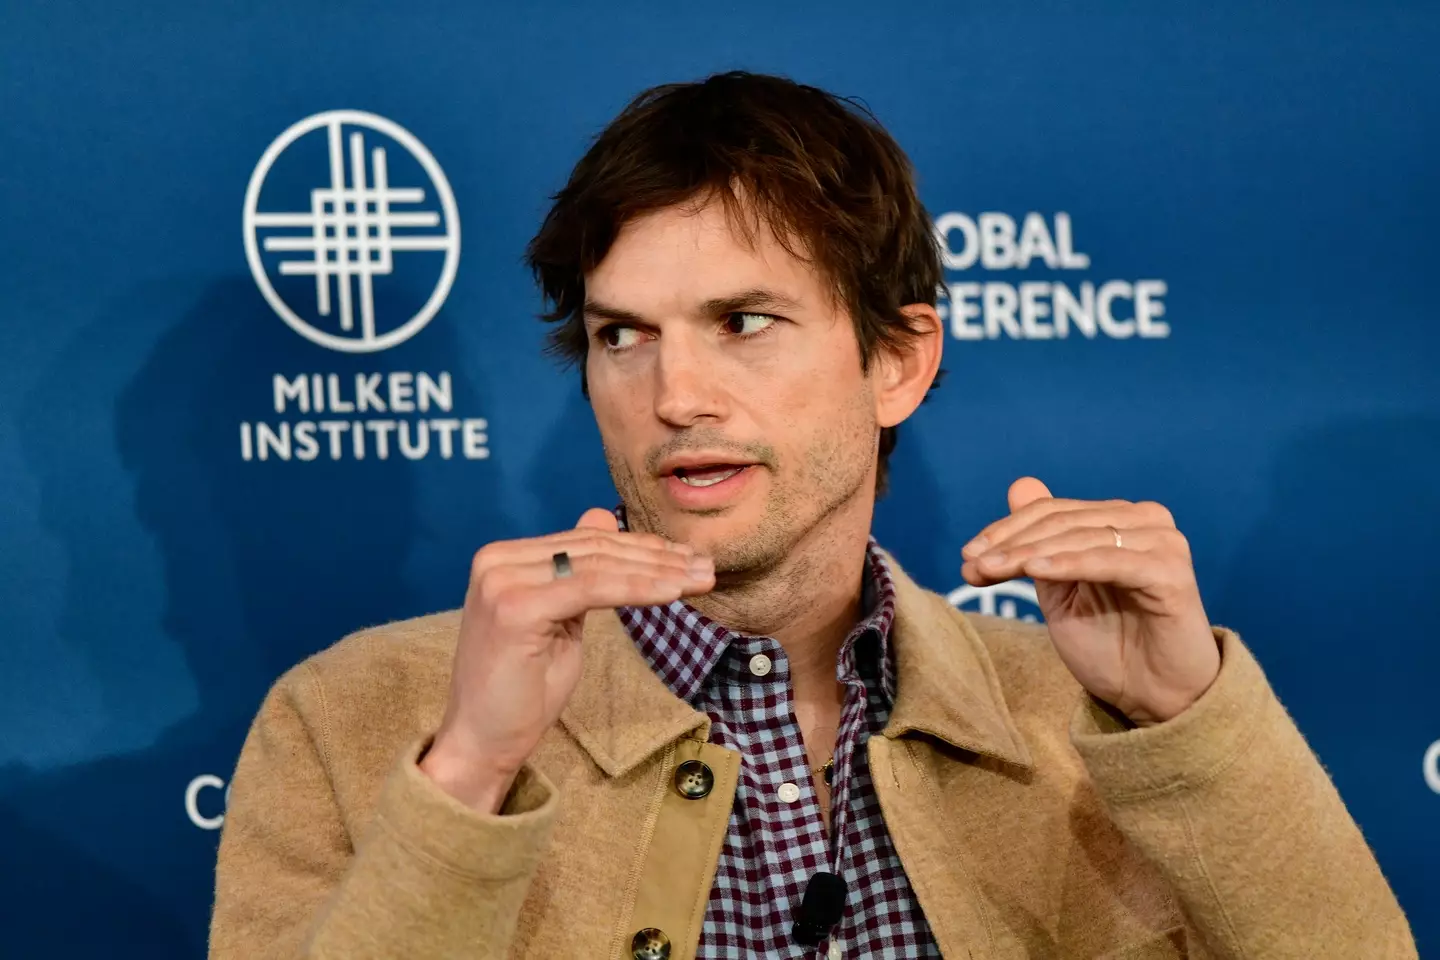 Ashton Kutcher was a topic of conversation.